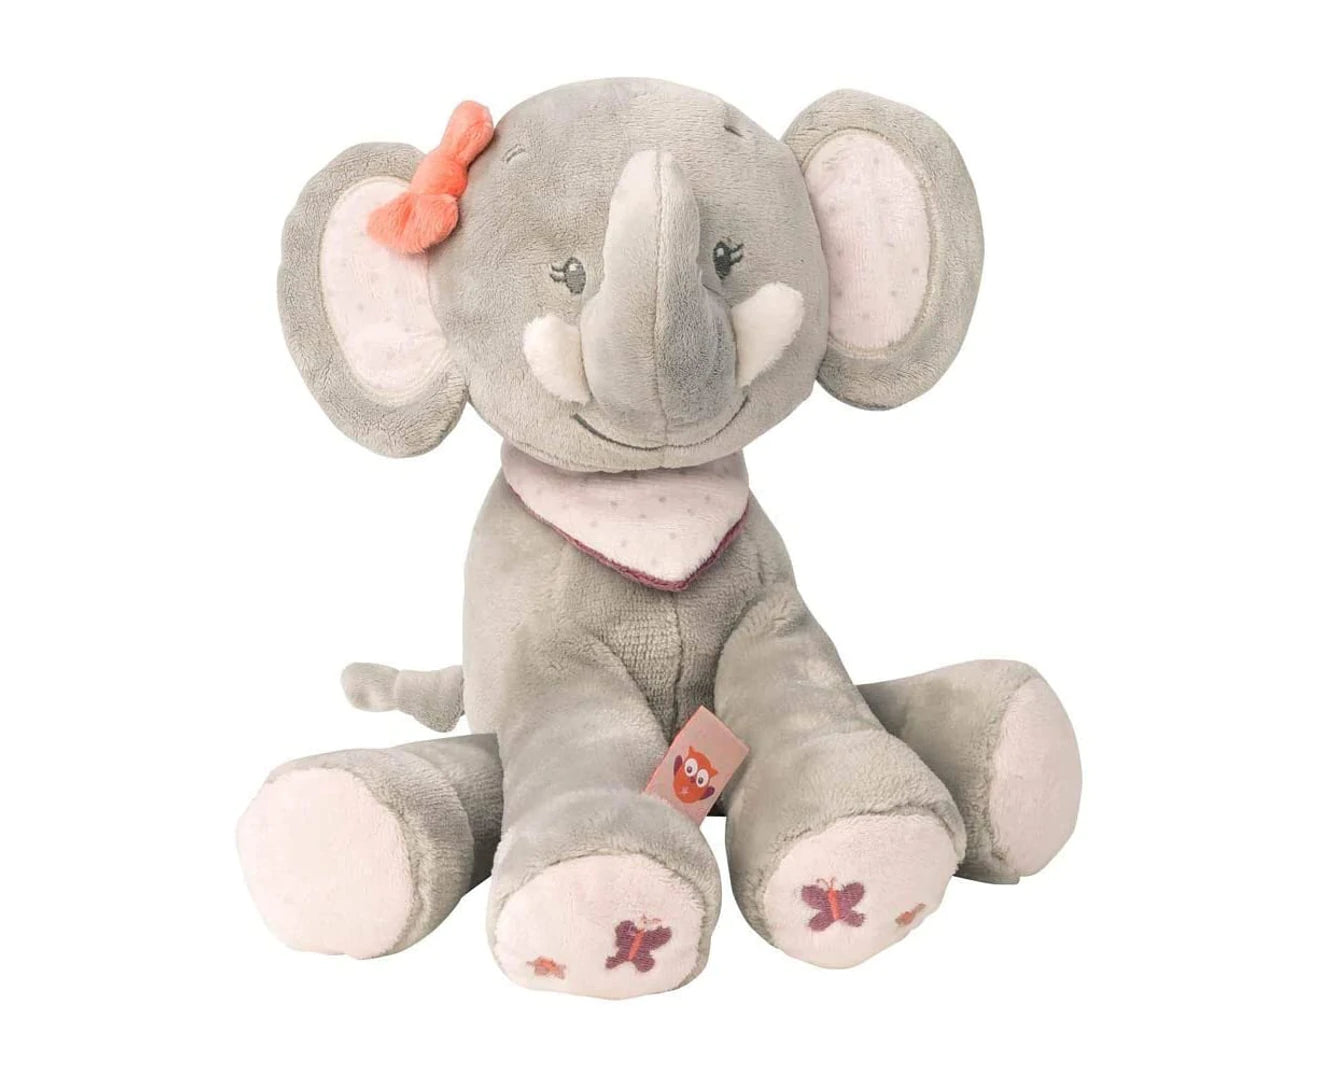 Cuddly Adele the Elephant Soft/Plush Stuffed Toy Baby/Newborn 0M+ 26.5Cm